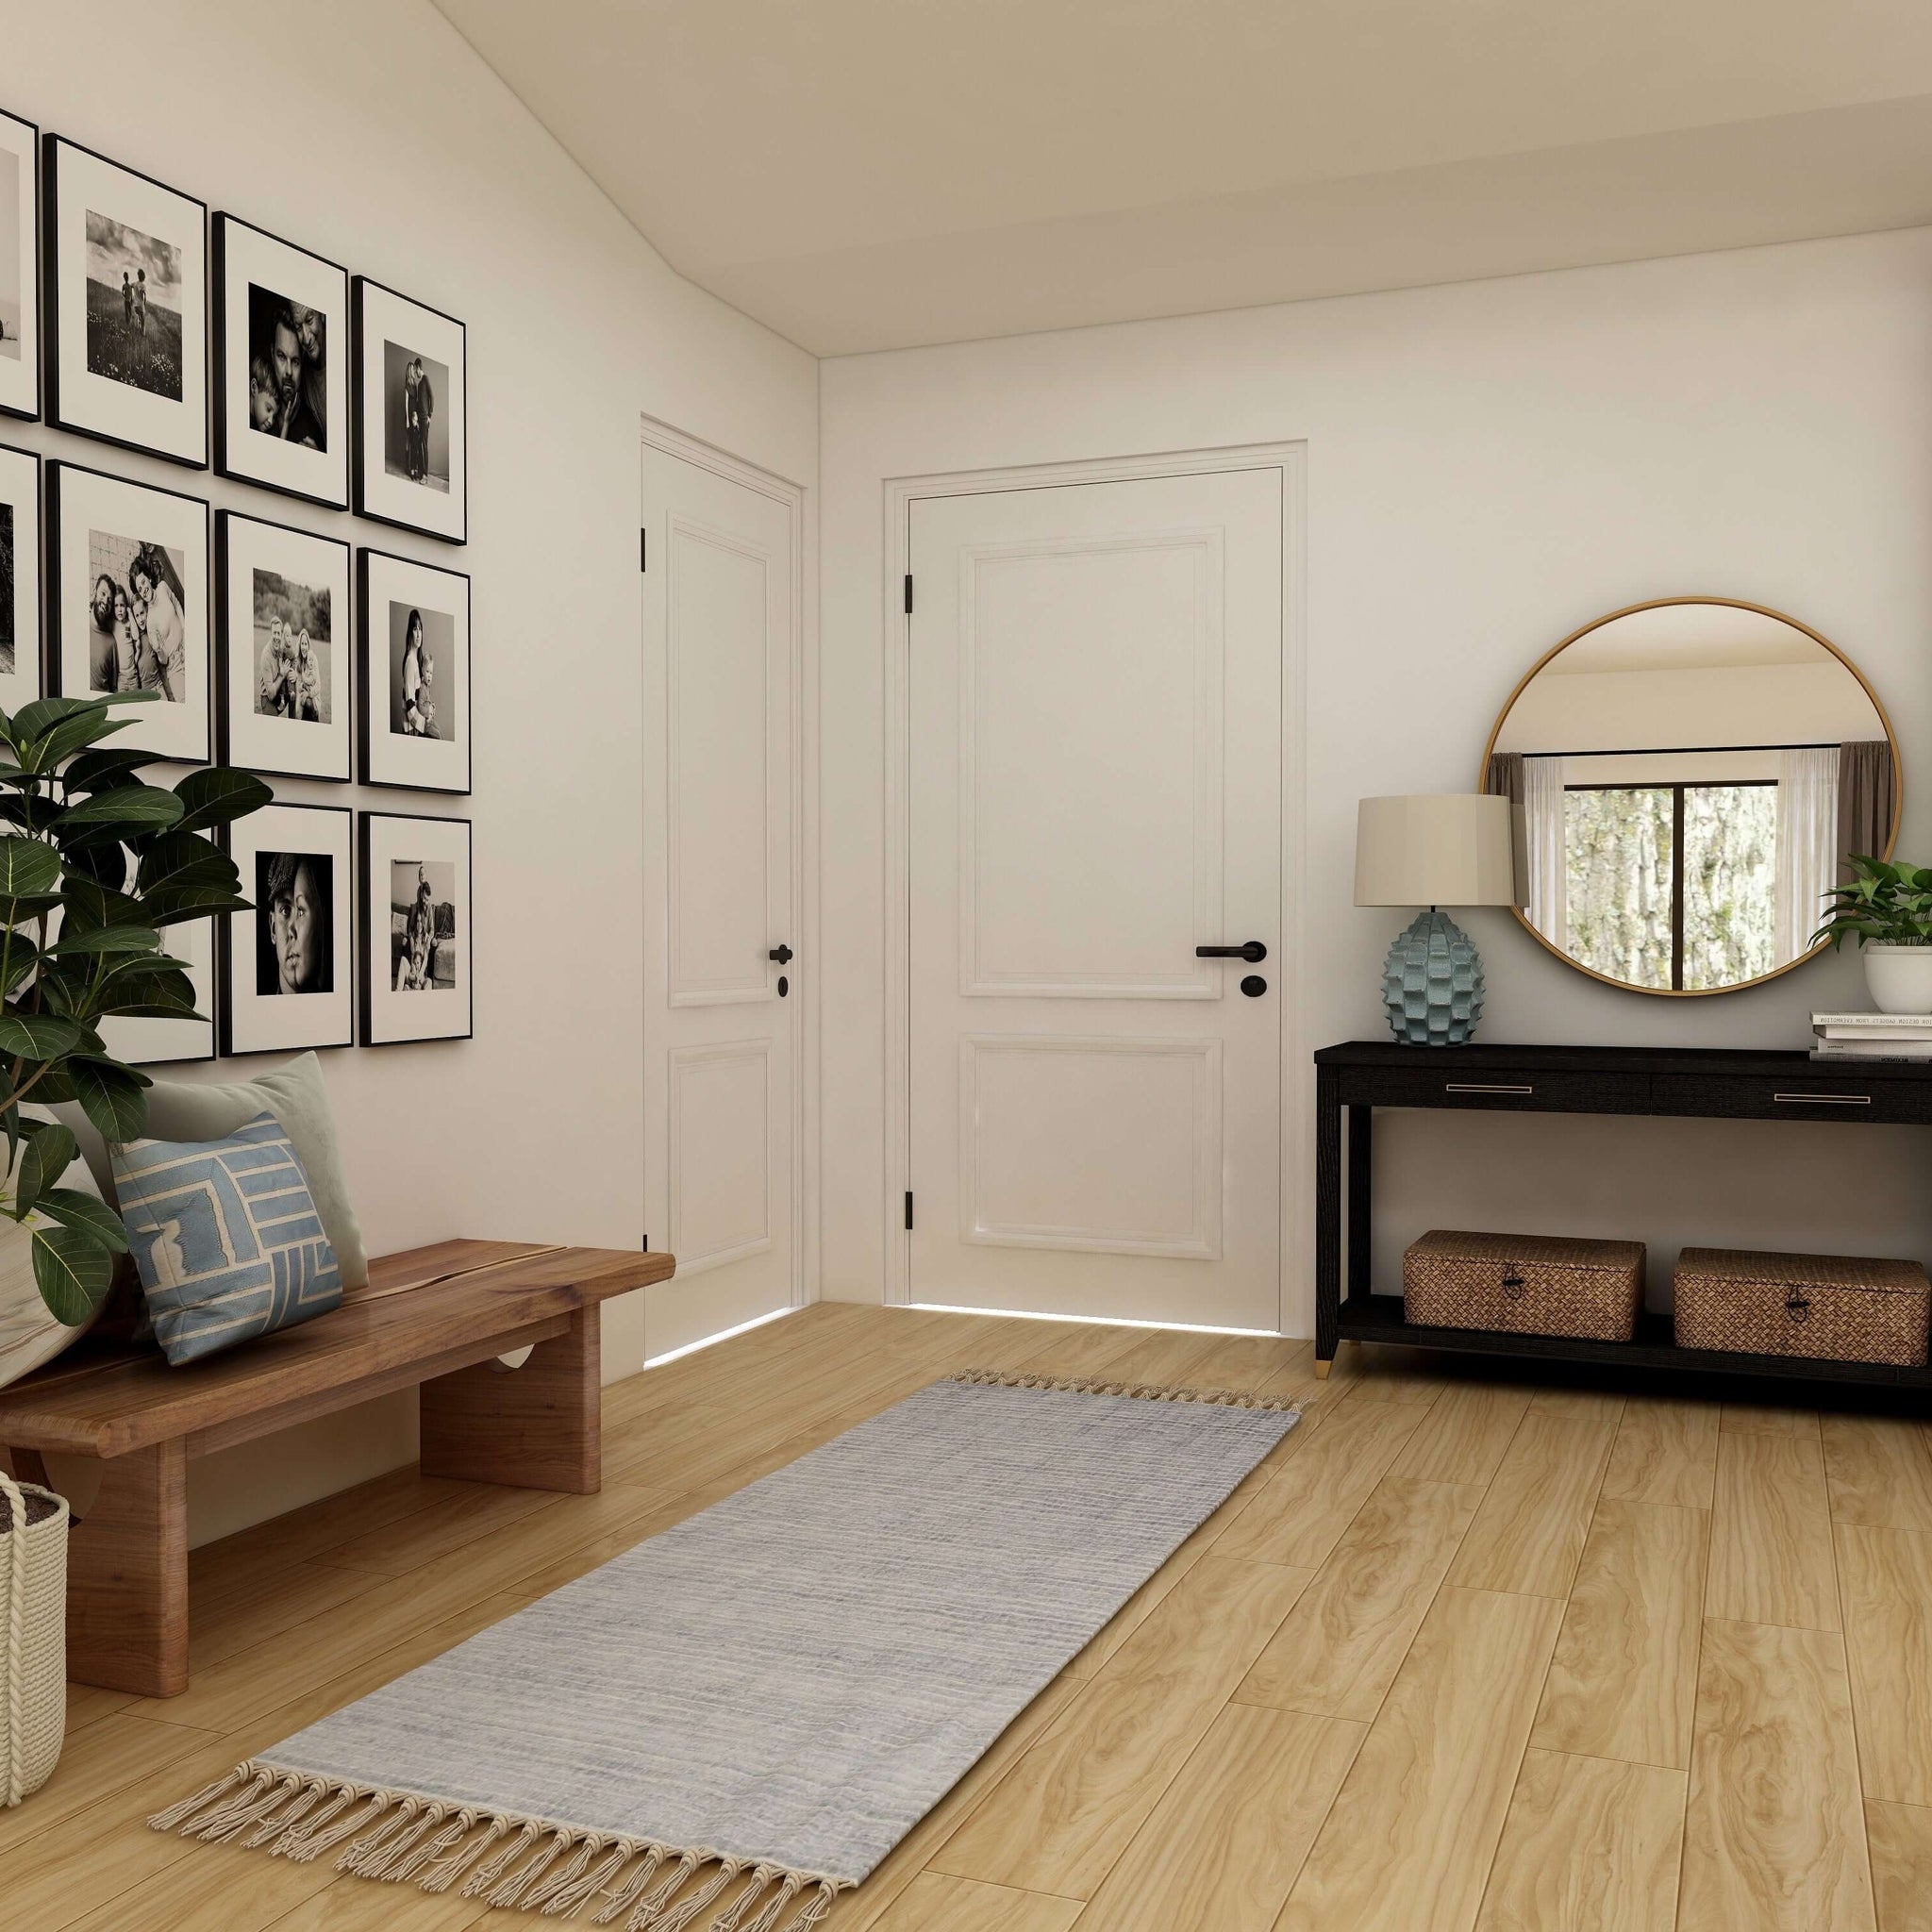 Mirrored Dresser - Blog link to entryway decoration idea